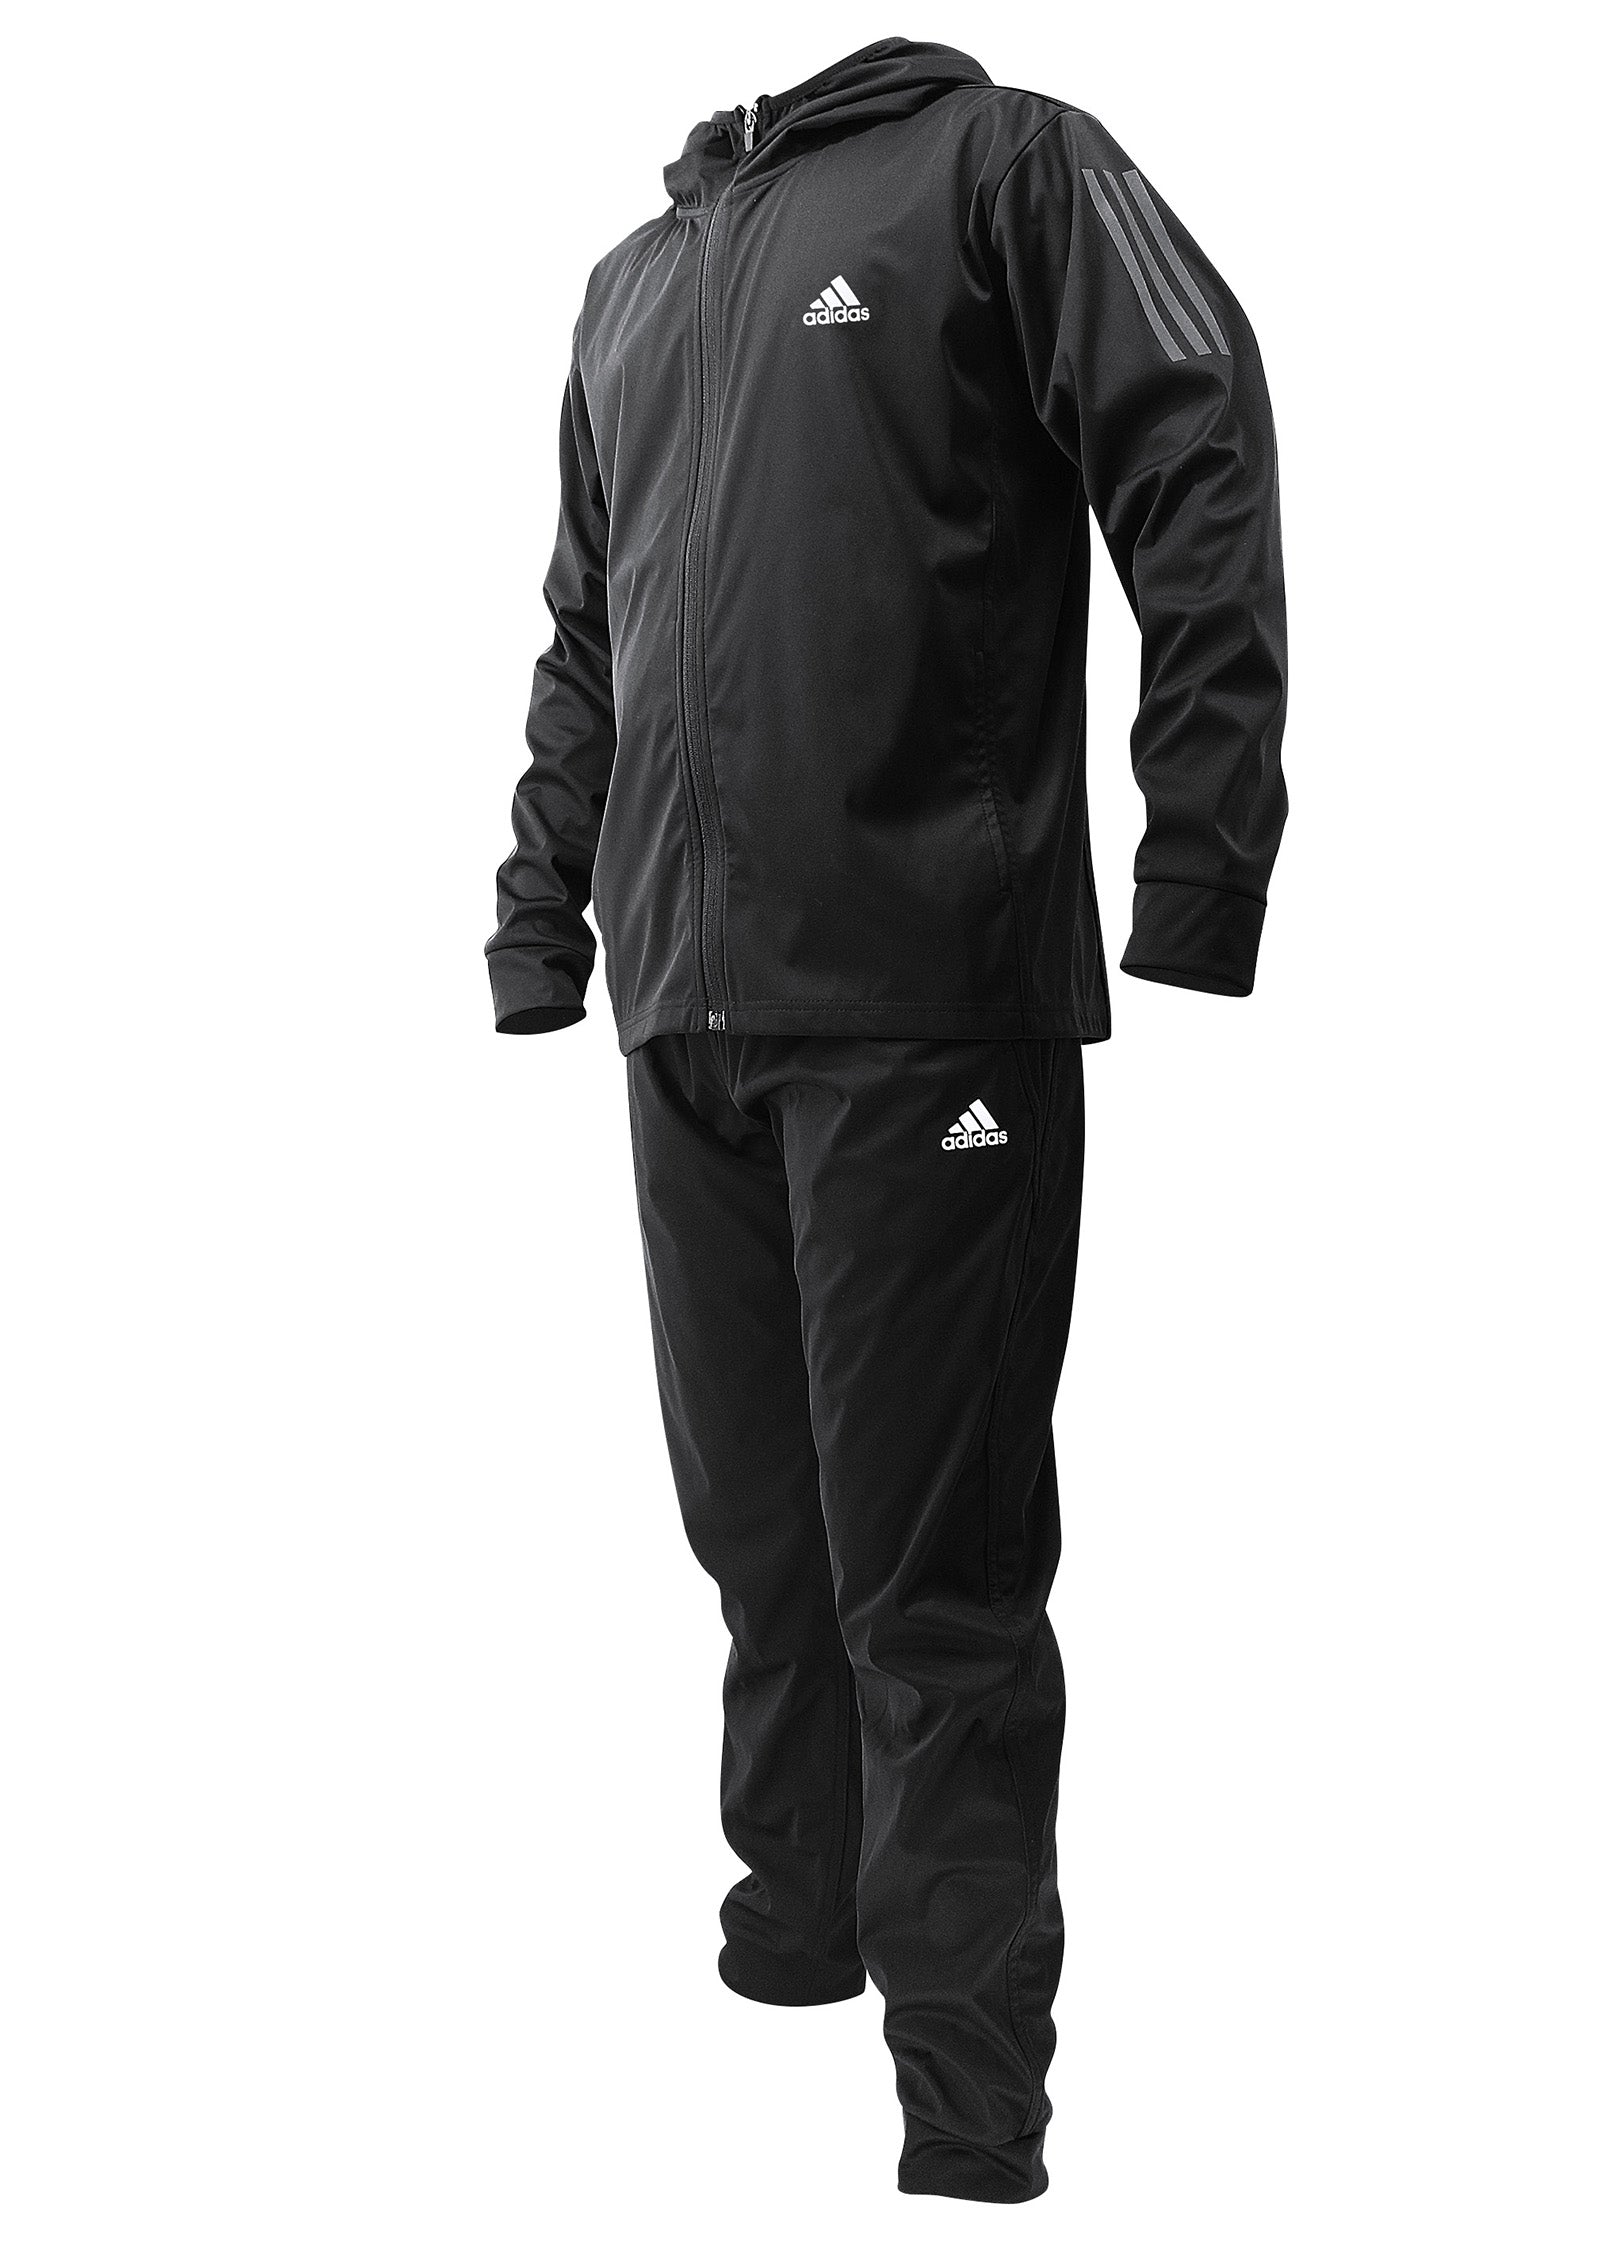 Adidas track suit top | Adidas track suit, Tracksuit, Clothes design